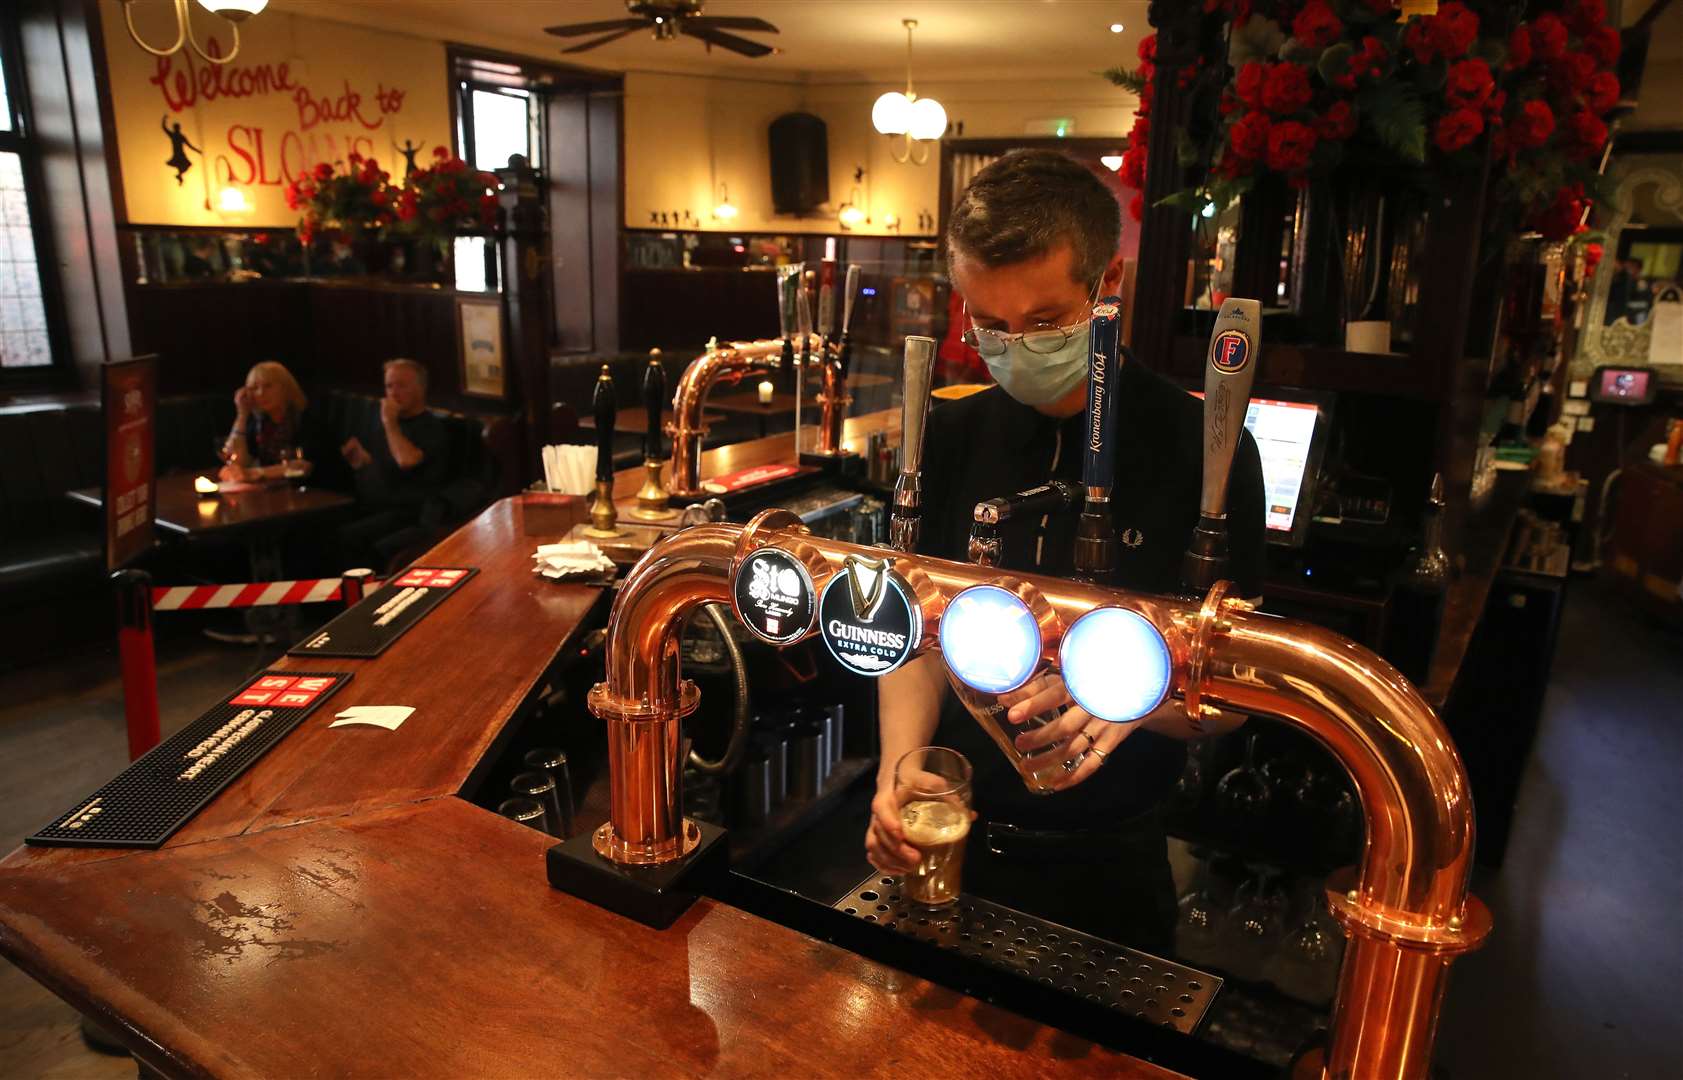 Pubs were reopened in July as lockdown measures were eased (Andrew Milligan/PA)